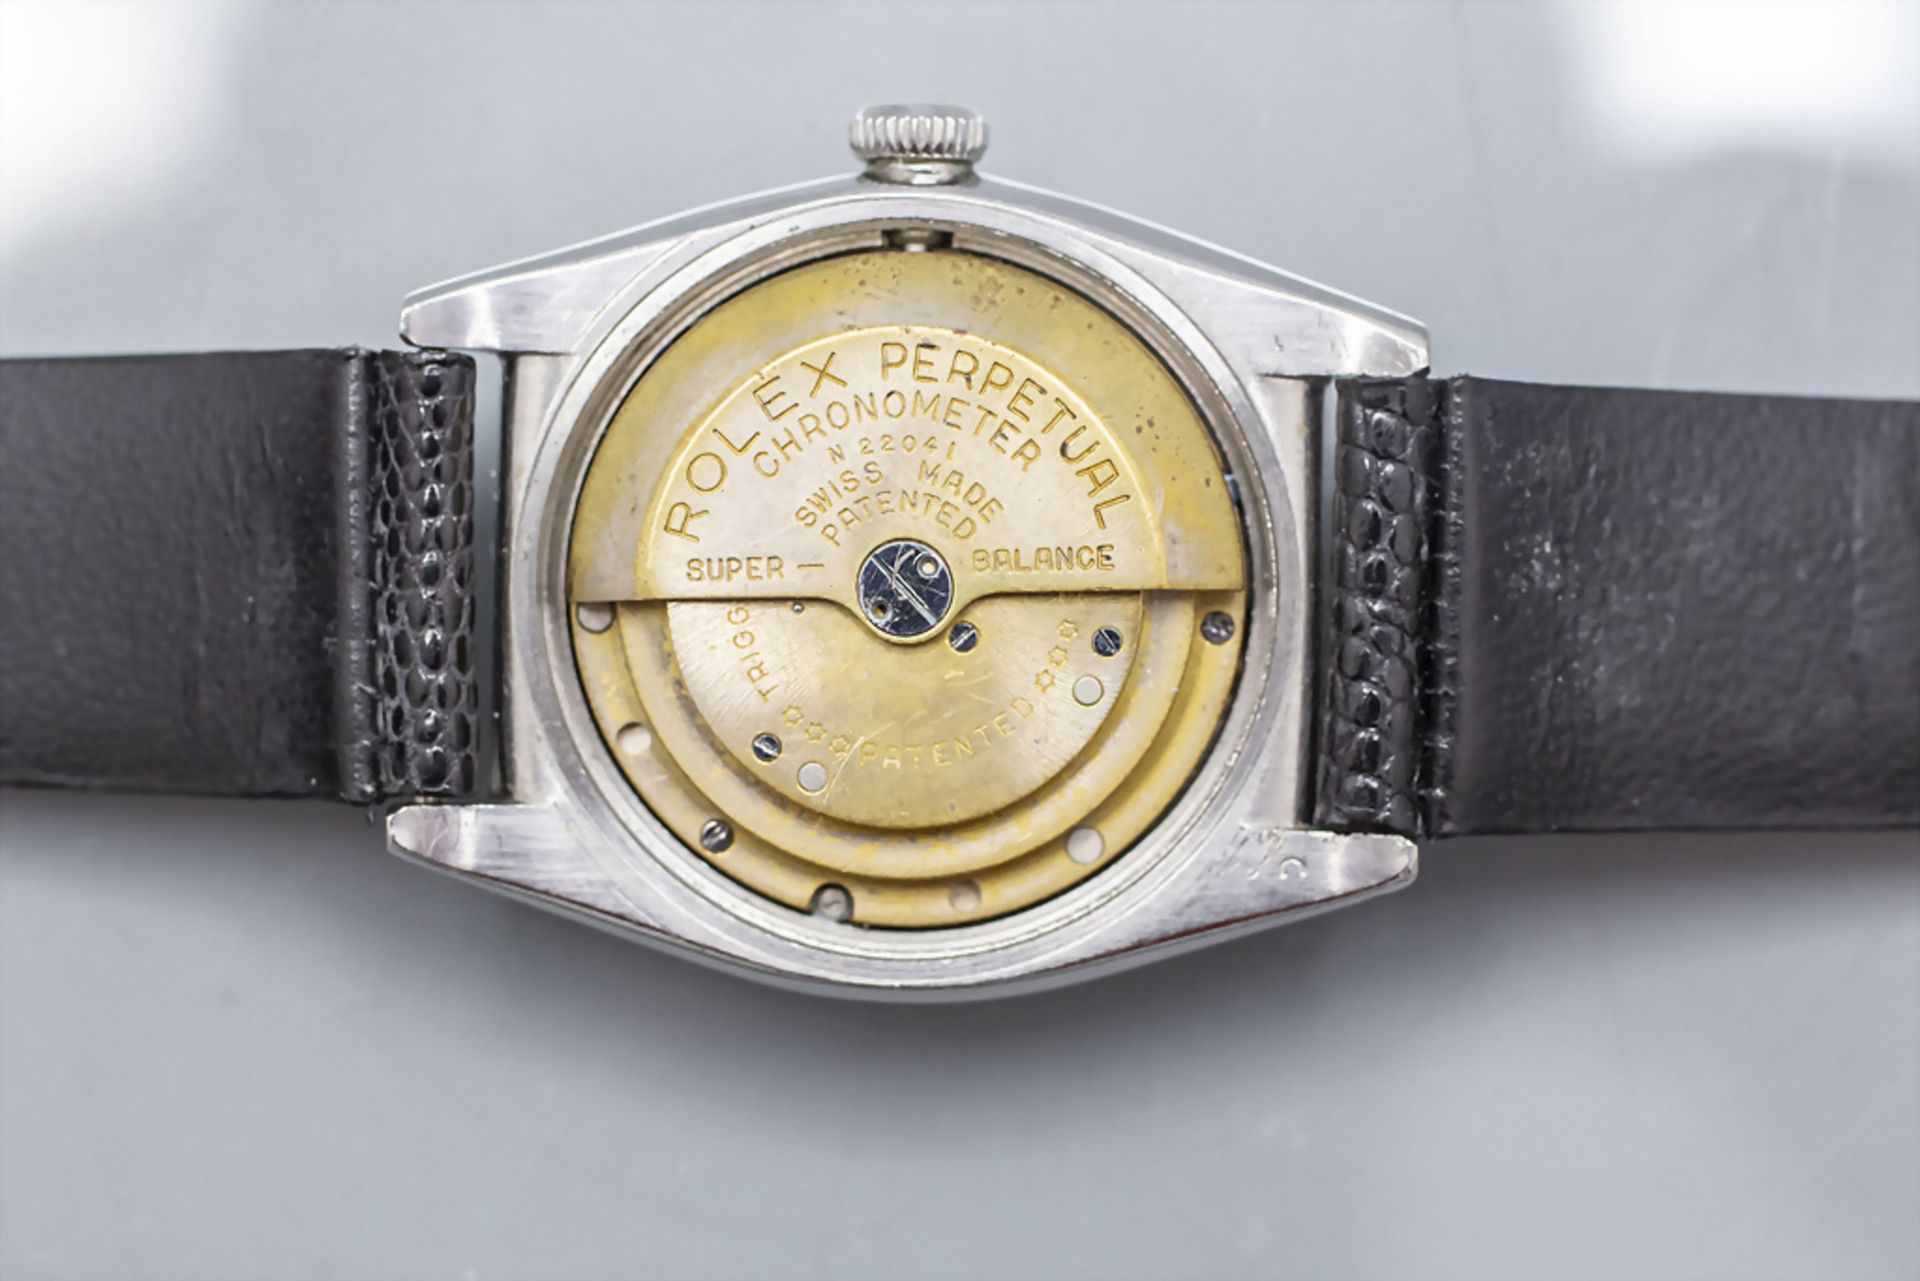 Rolex Bubbleback Oyster Perpetual Chronometer, Schweiz / Swiss, um 1950 - Image 3 of 8